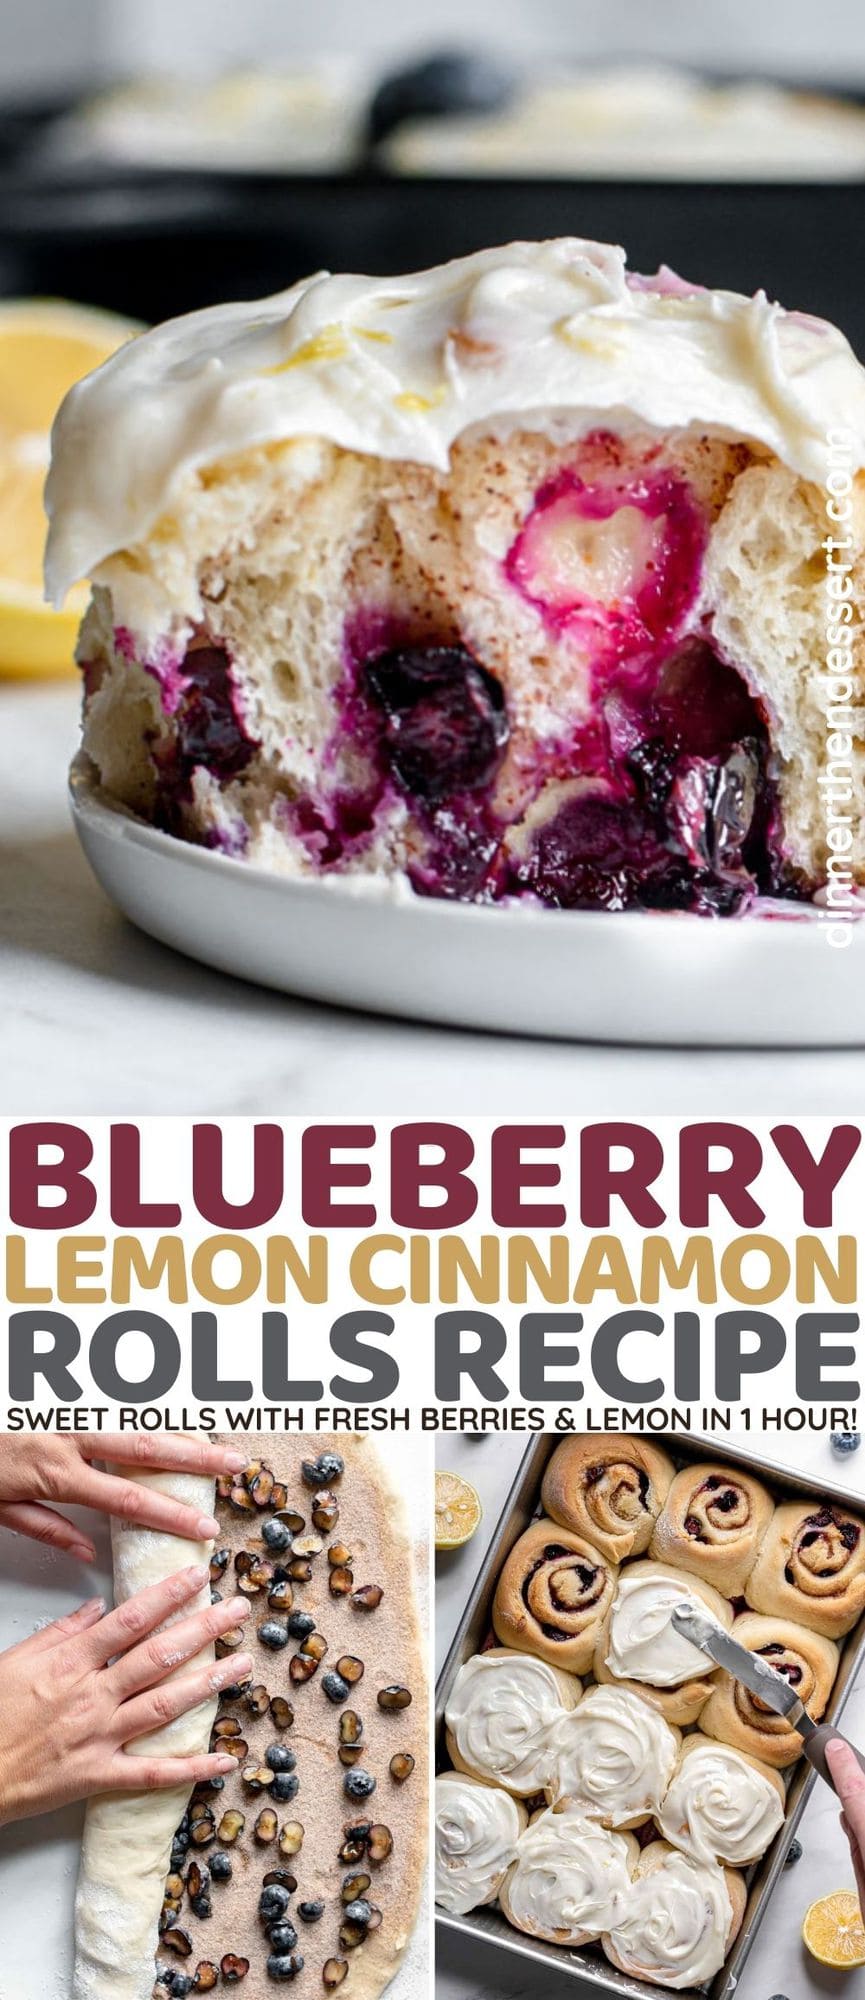 Blueberry Lemon Cinnamon Rolls single roll cut in half on plate side view collage